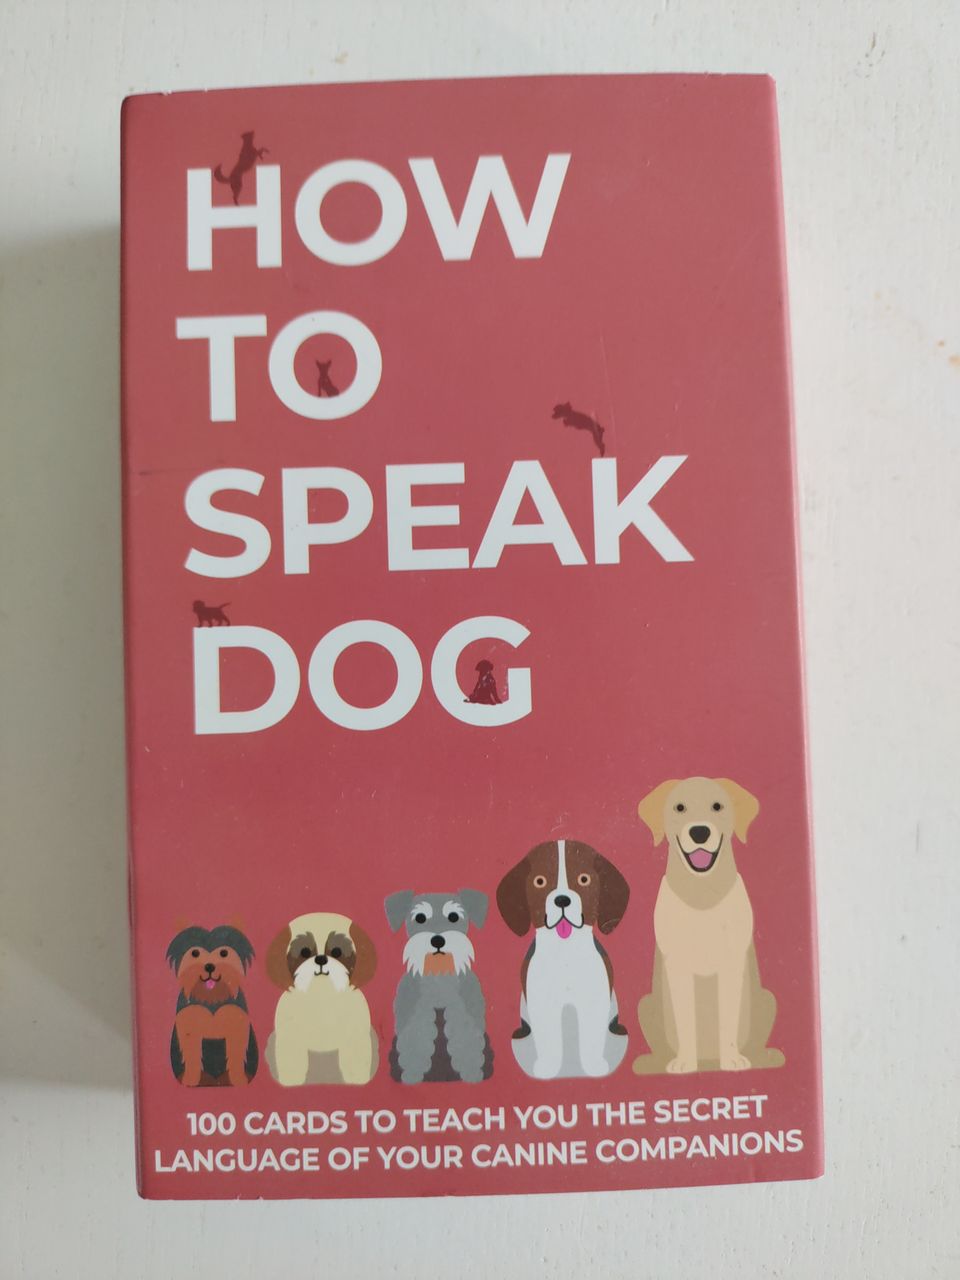 How to speak dog - kortit / cards